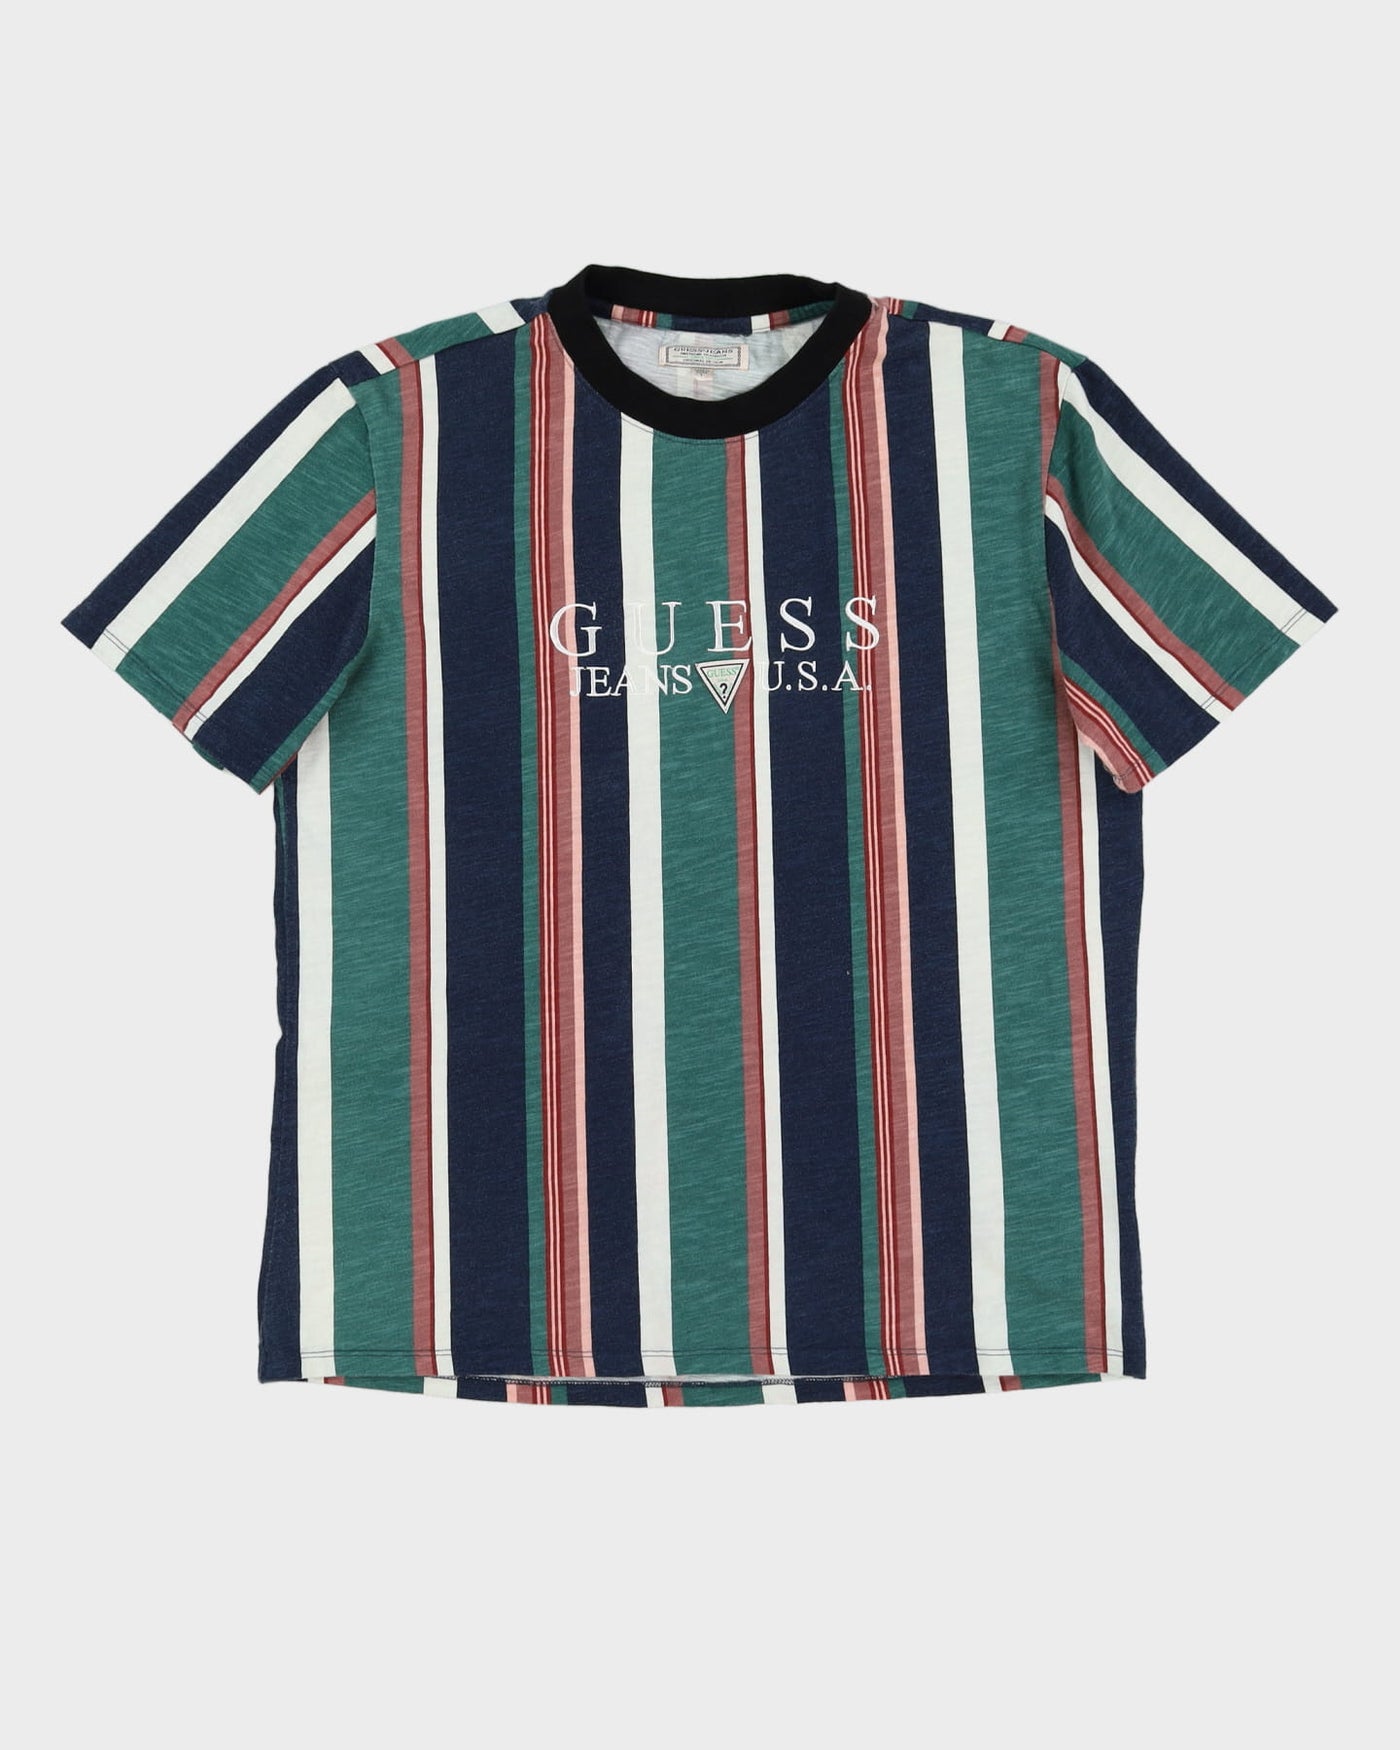 00s Guess Green / Navy / White Striped T-Shirt - L